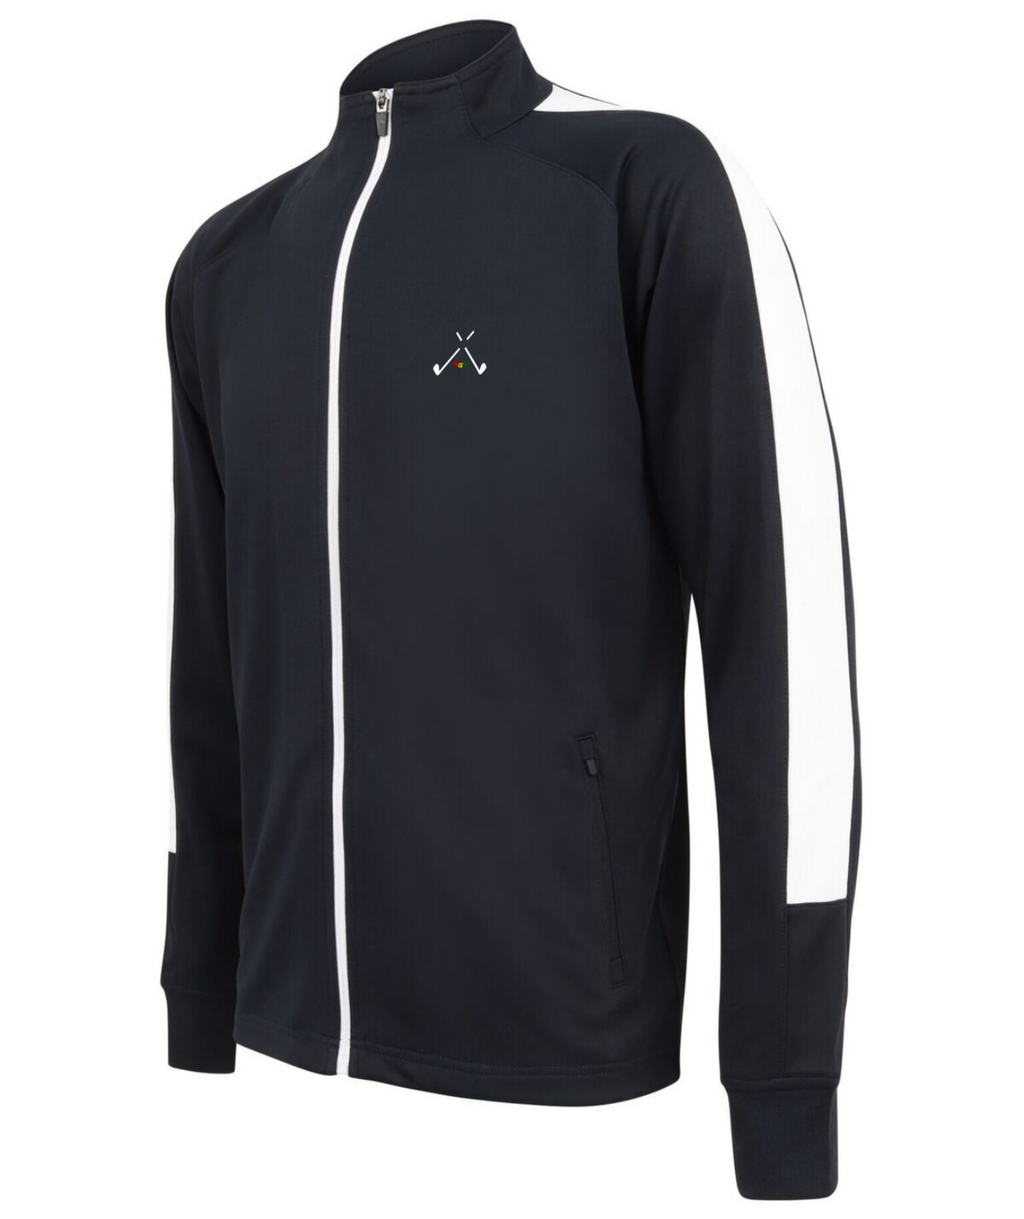 golf god clothing crossed clubs jacket